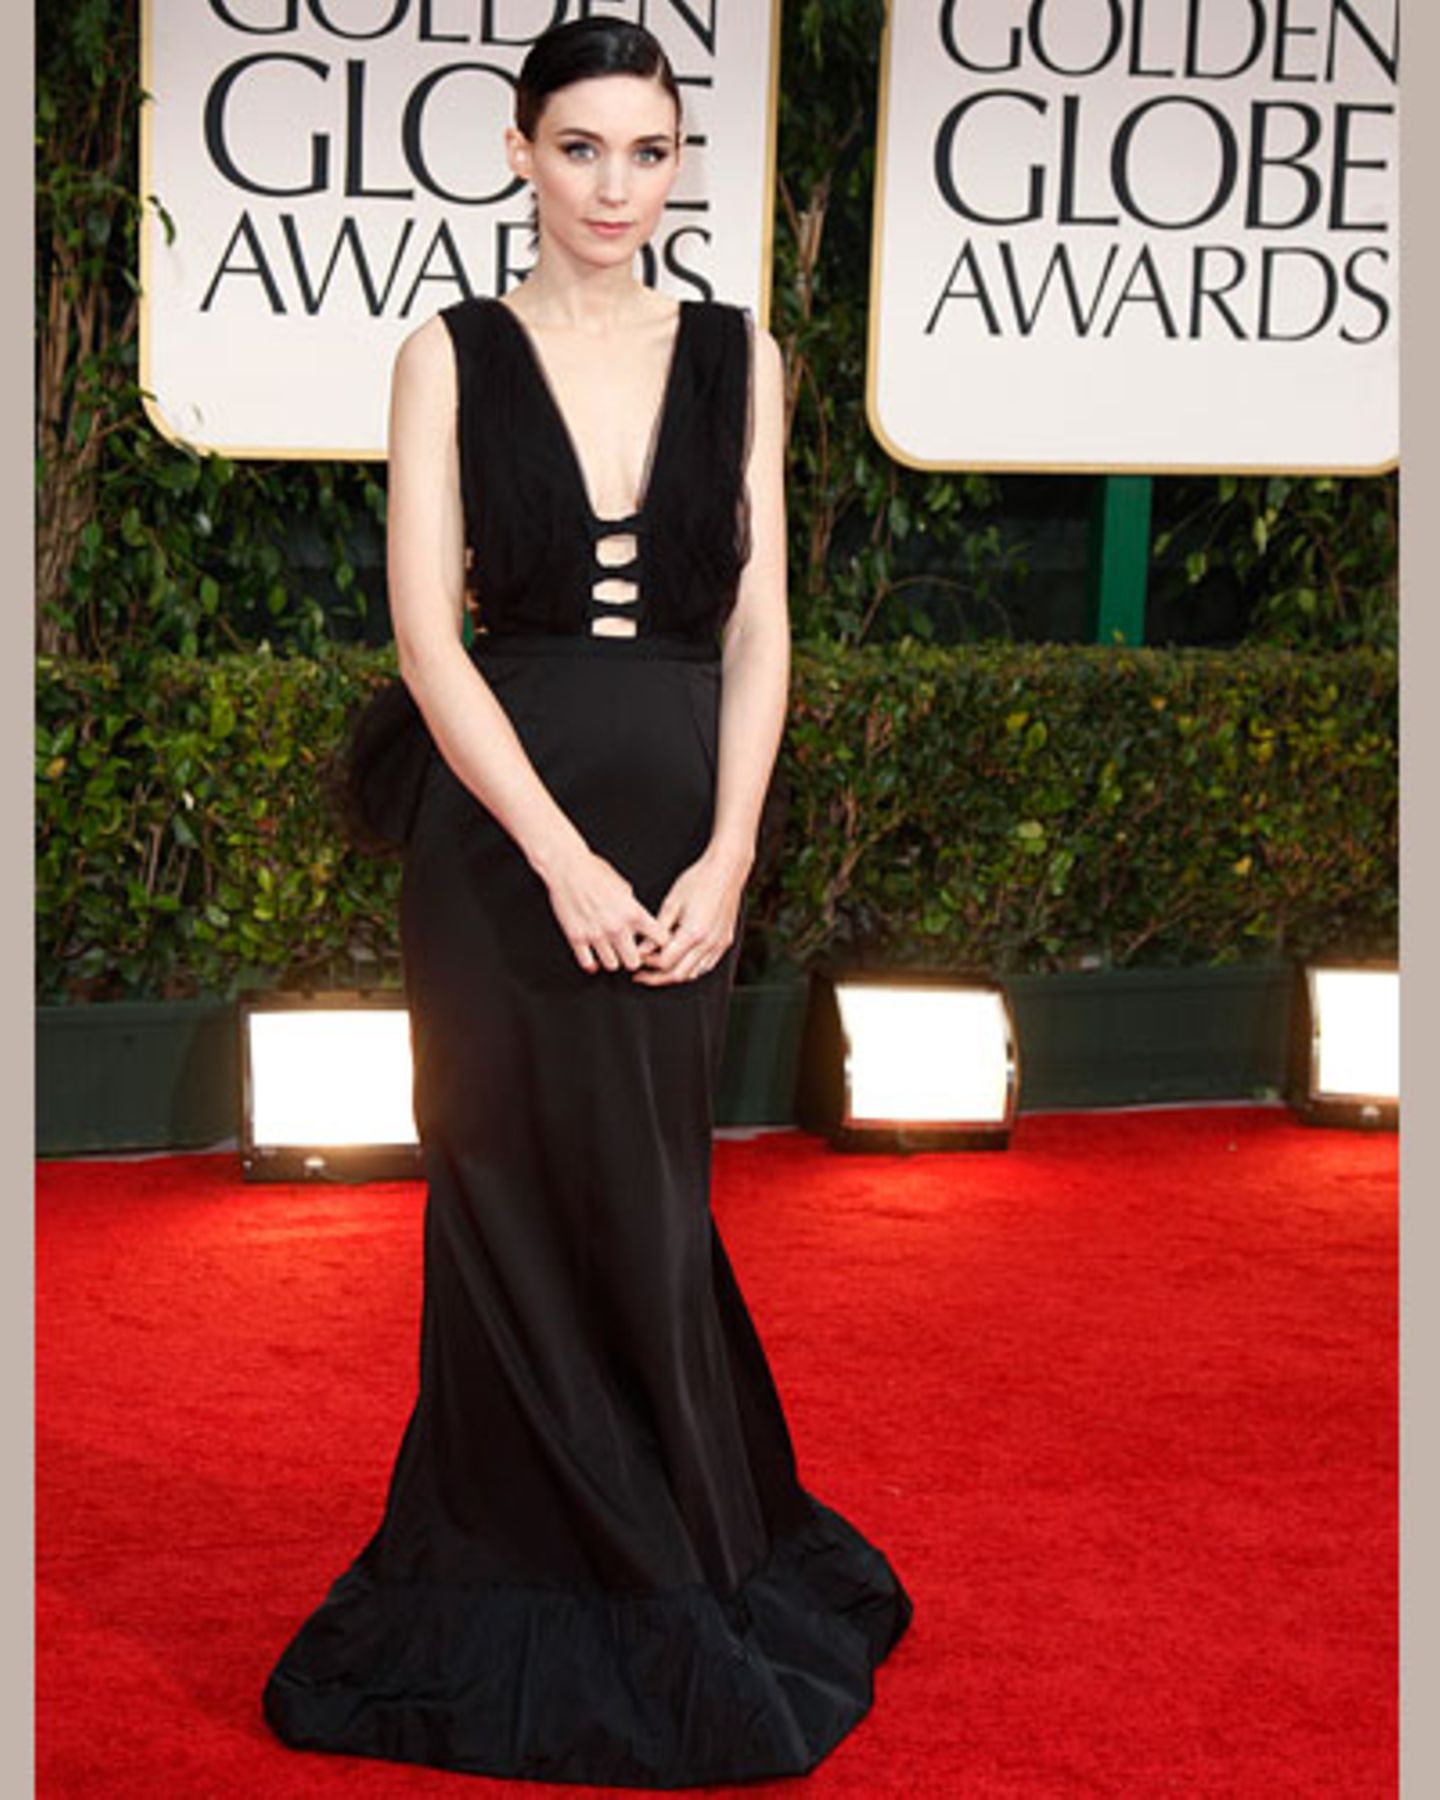 Golden Globes 2012: Rooney Mara